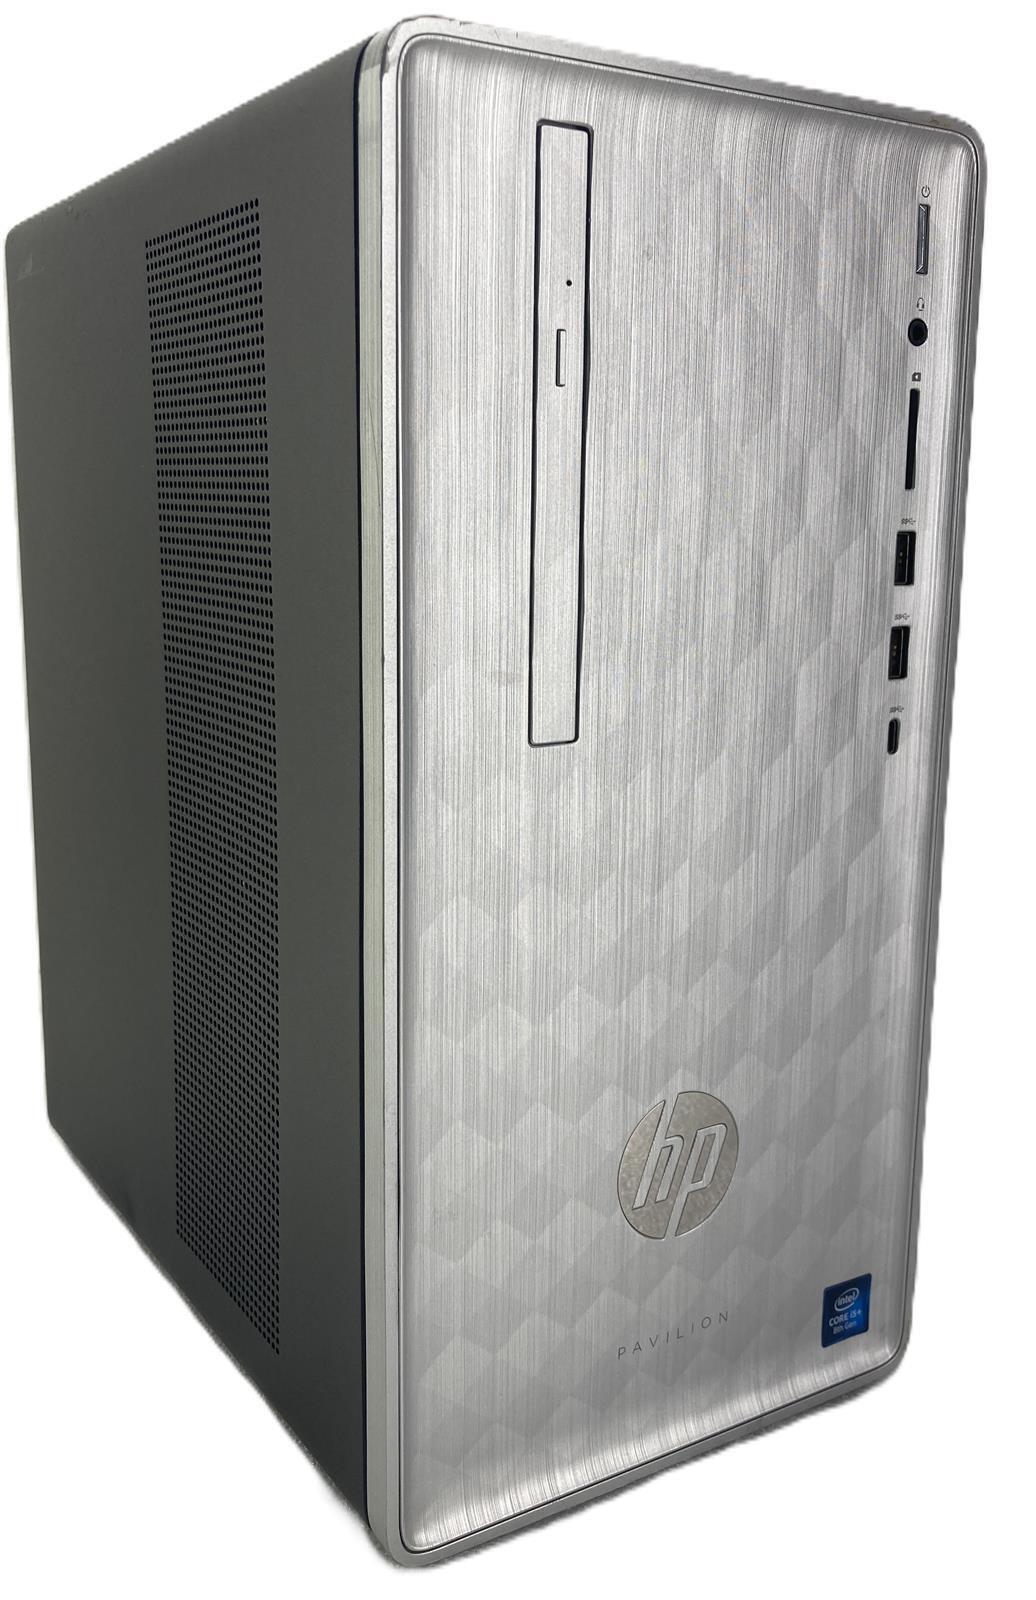 HP PAVILION DESKTOP 590-P0050 i5-84002.80GHz 16GB 256GB Radeon R7 350